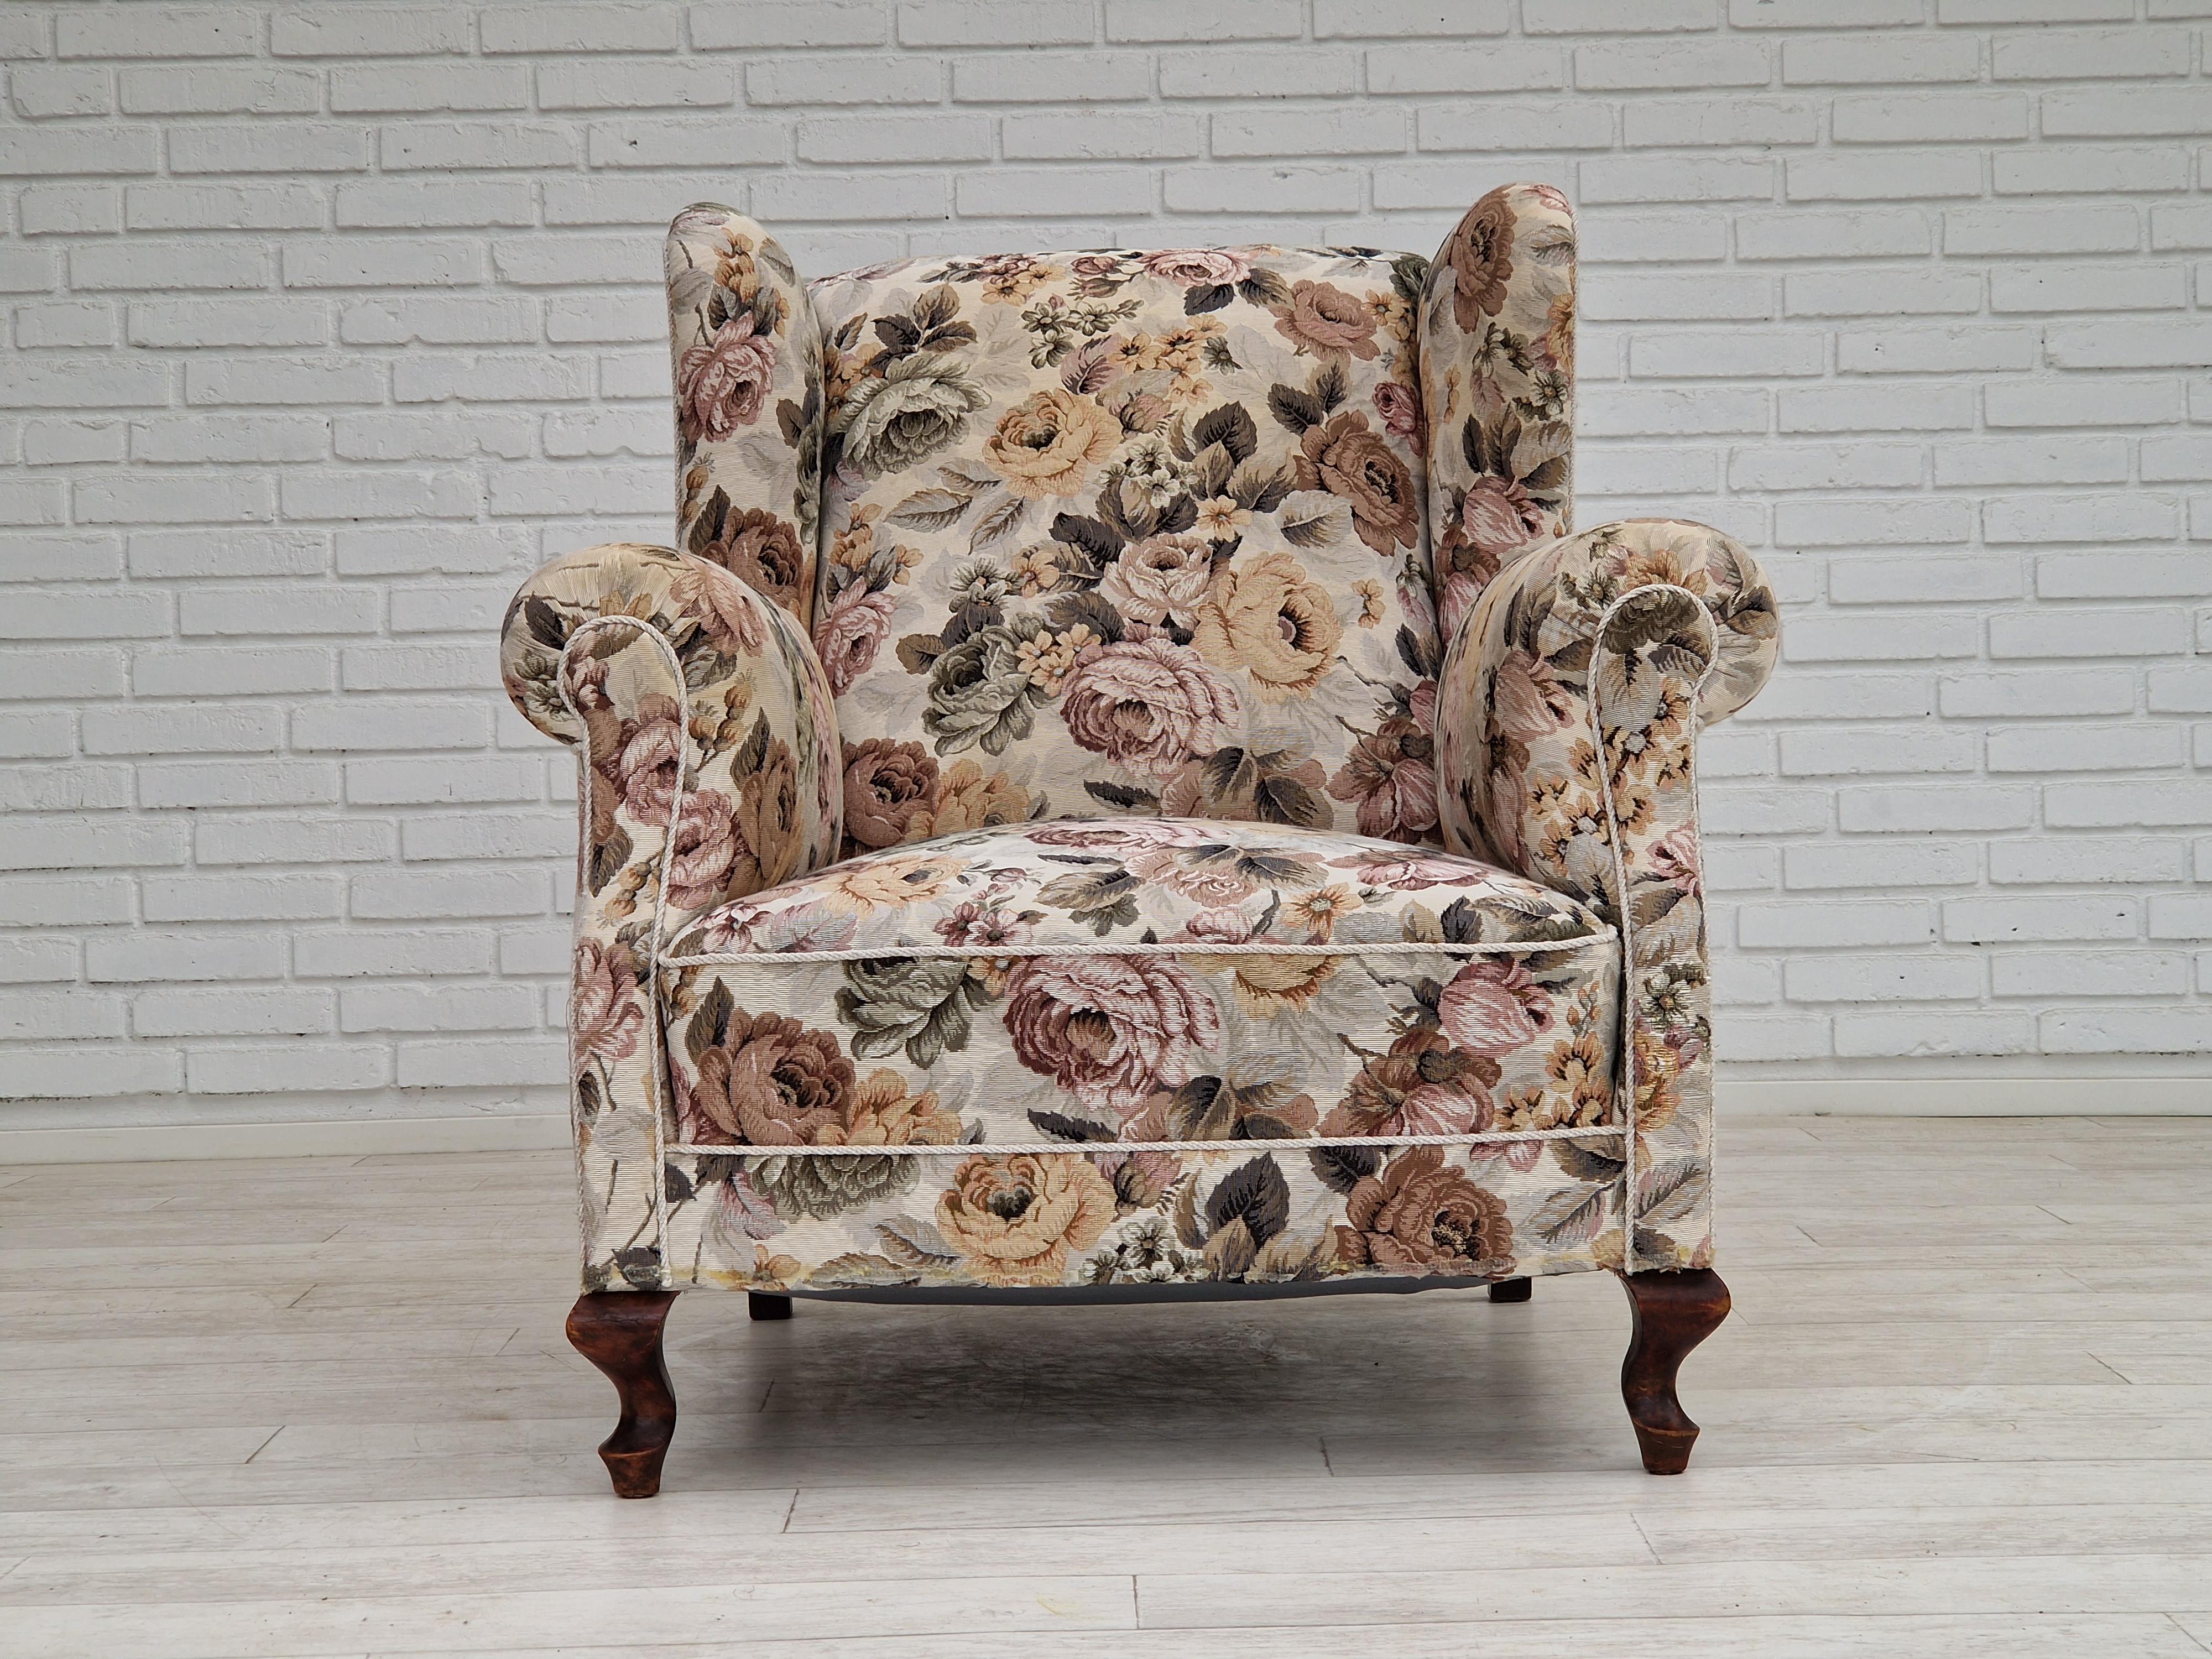 Milieu du XXe siècle 1950s, Danish vintage relax chair in 